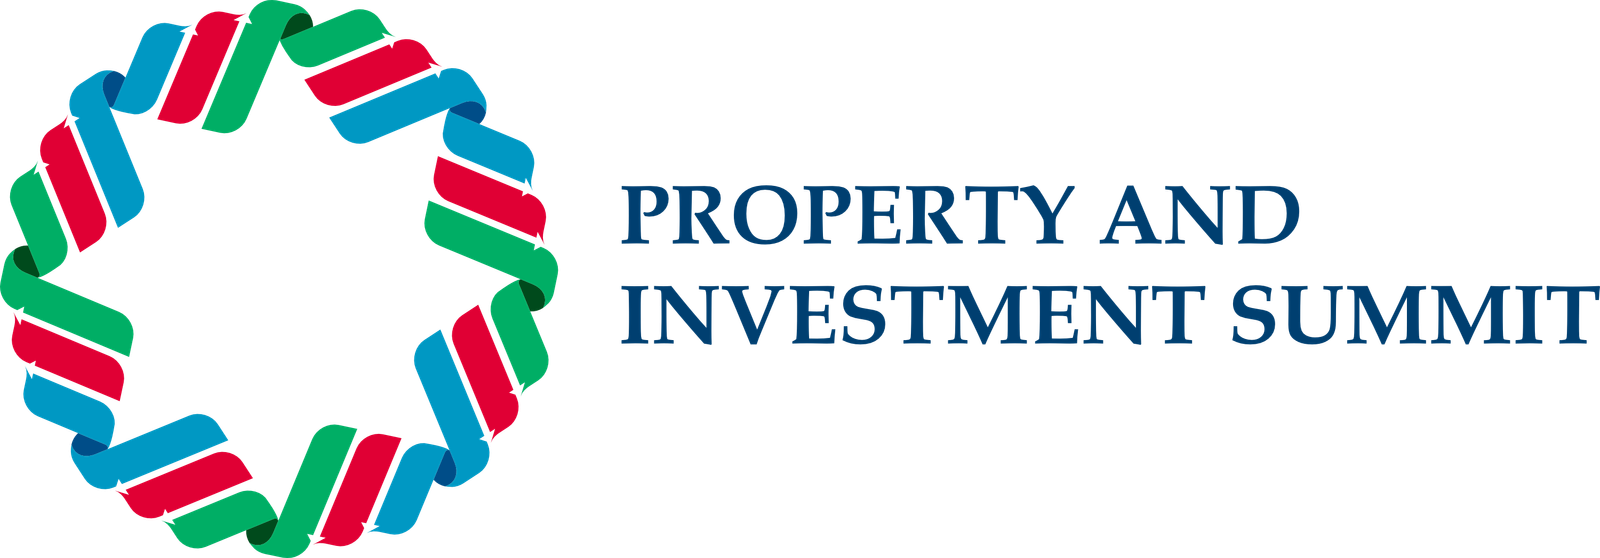 https://propertyandinvestment.az/uploads/about/1797750747720837.png